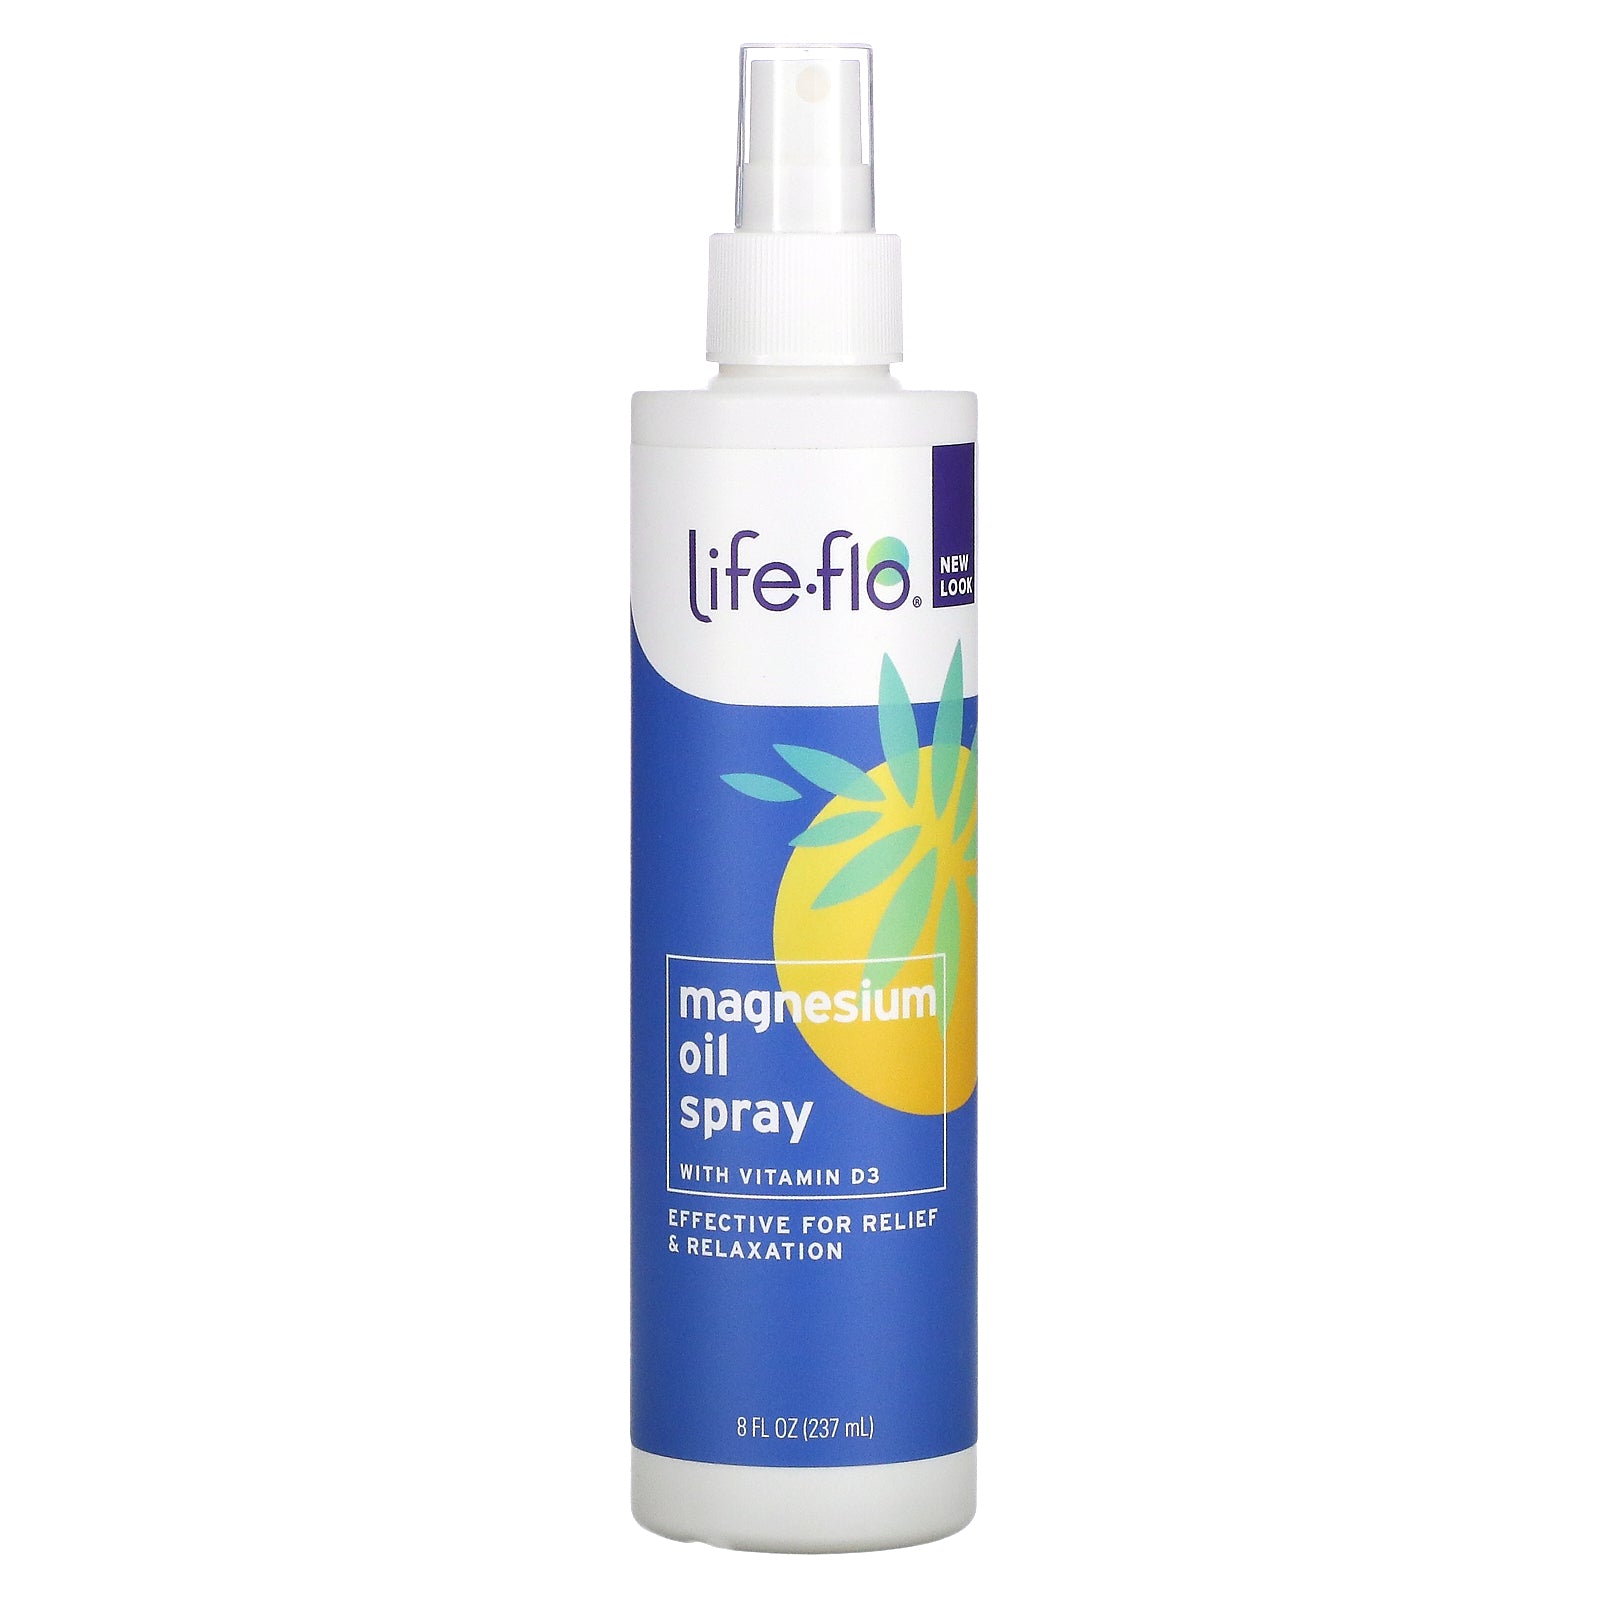 Life-flo, Magnesium Oil Spray, With Vitamin D3